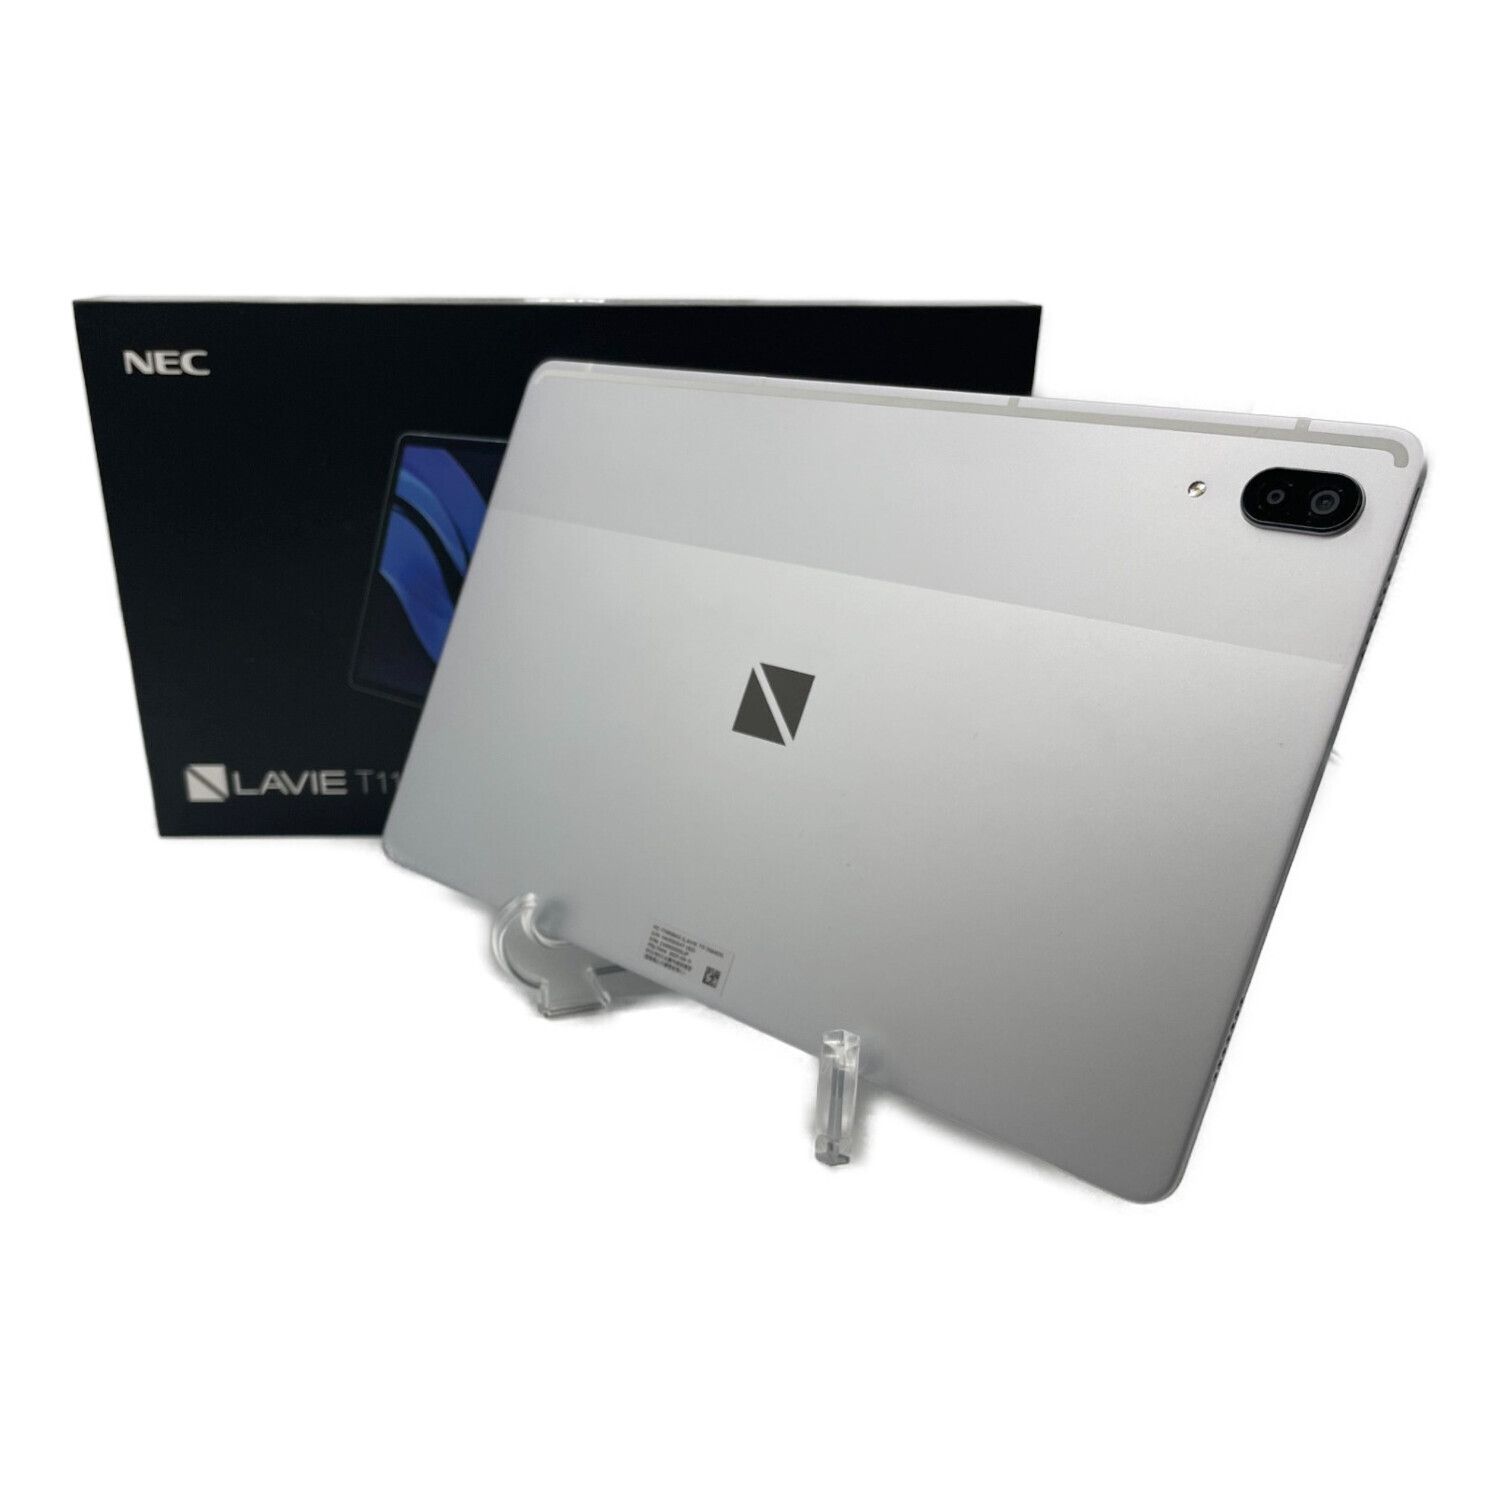 NEC (エヌイーシー) タブレット LAVIE T11 11QHD1 128GB Wi-Fiモデル